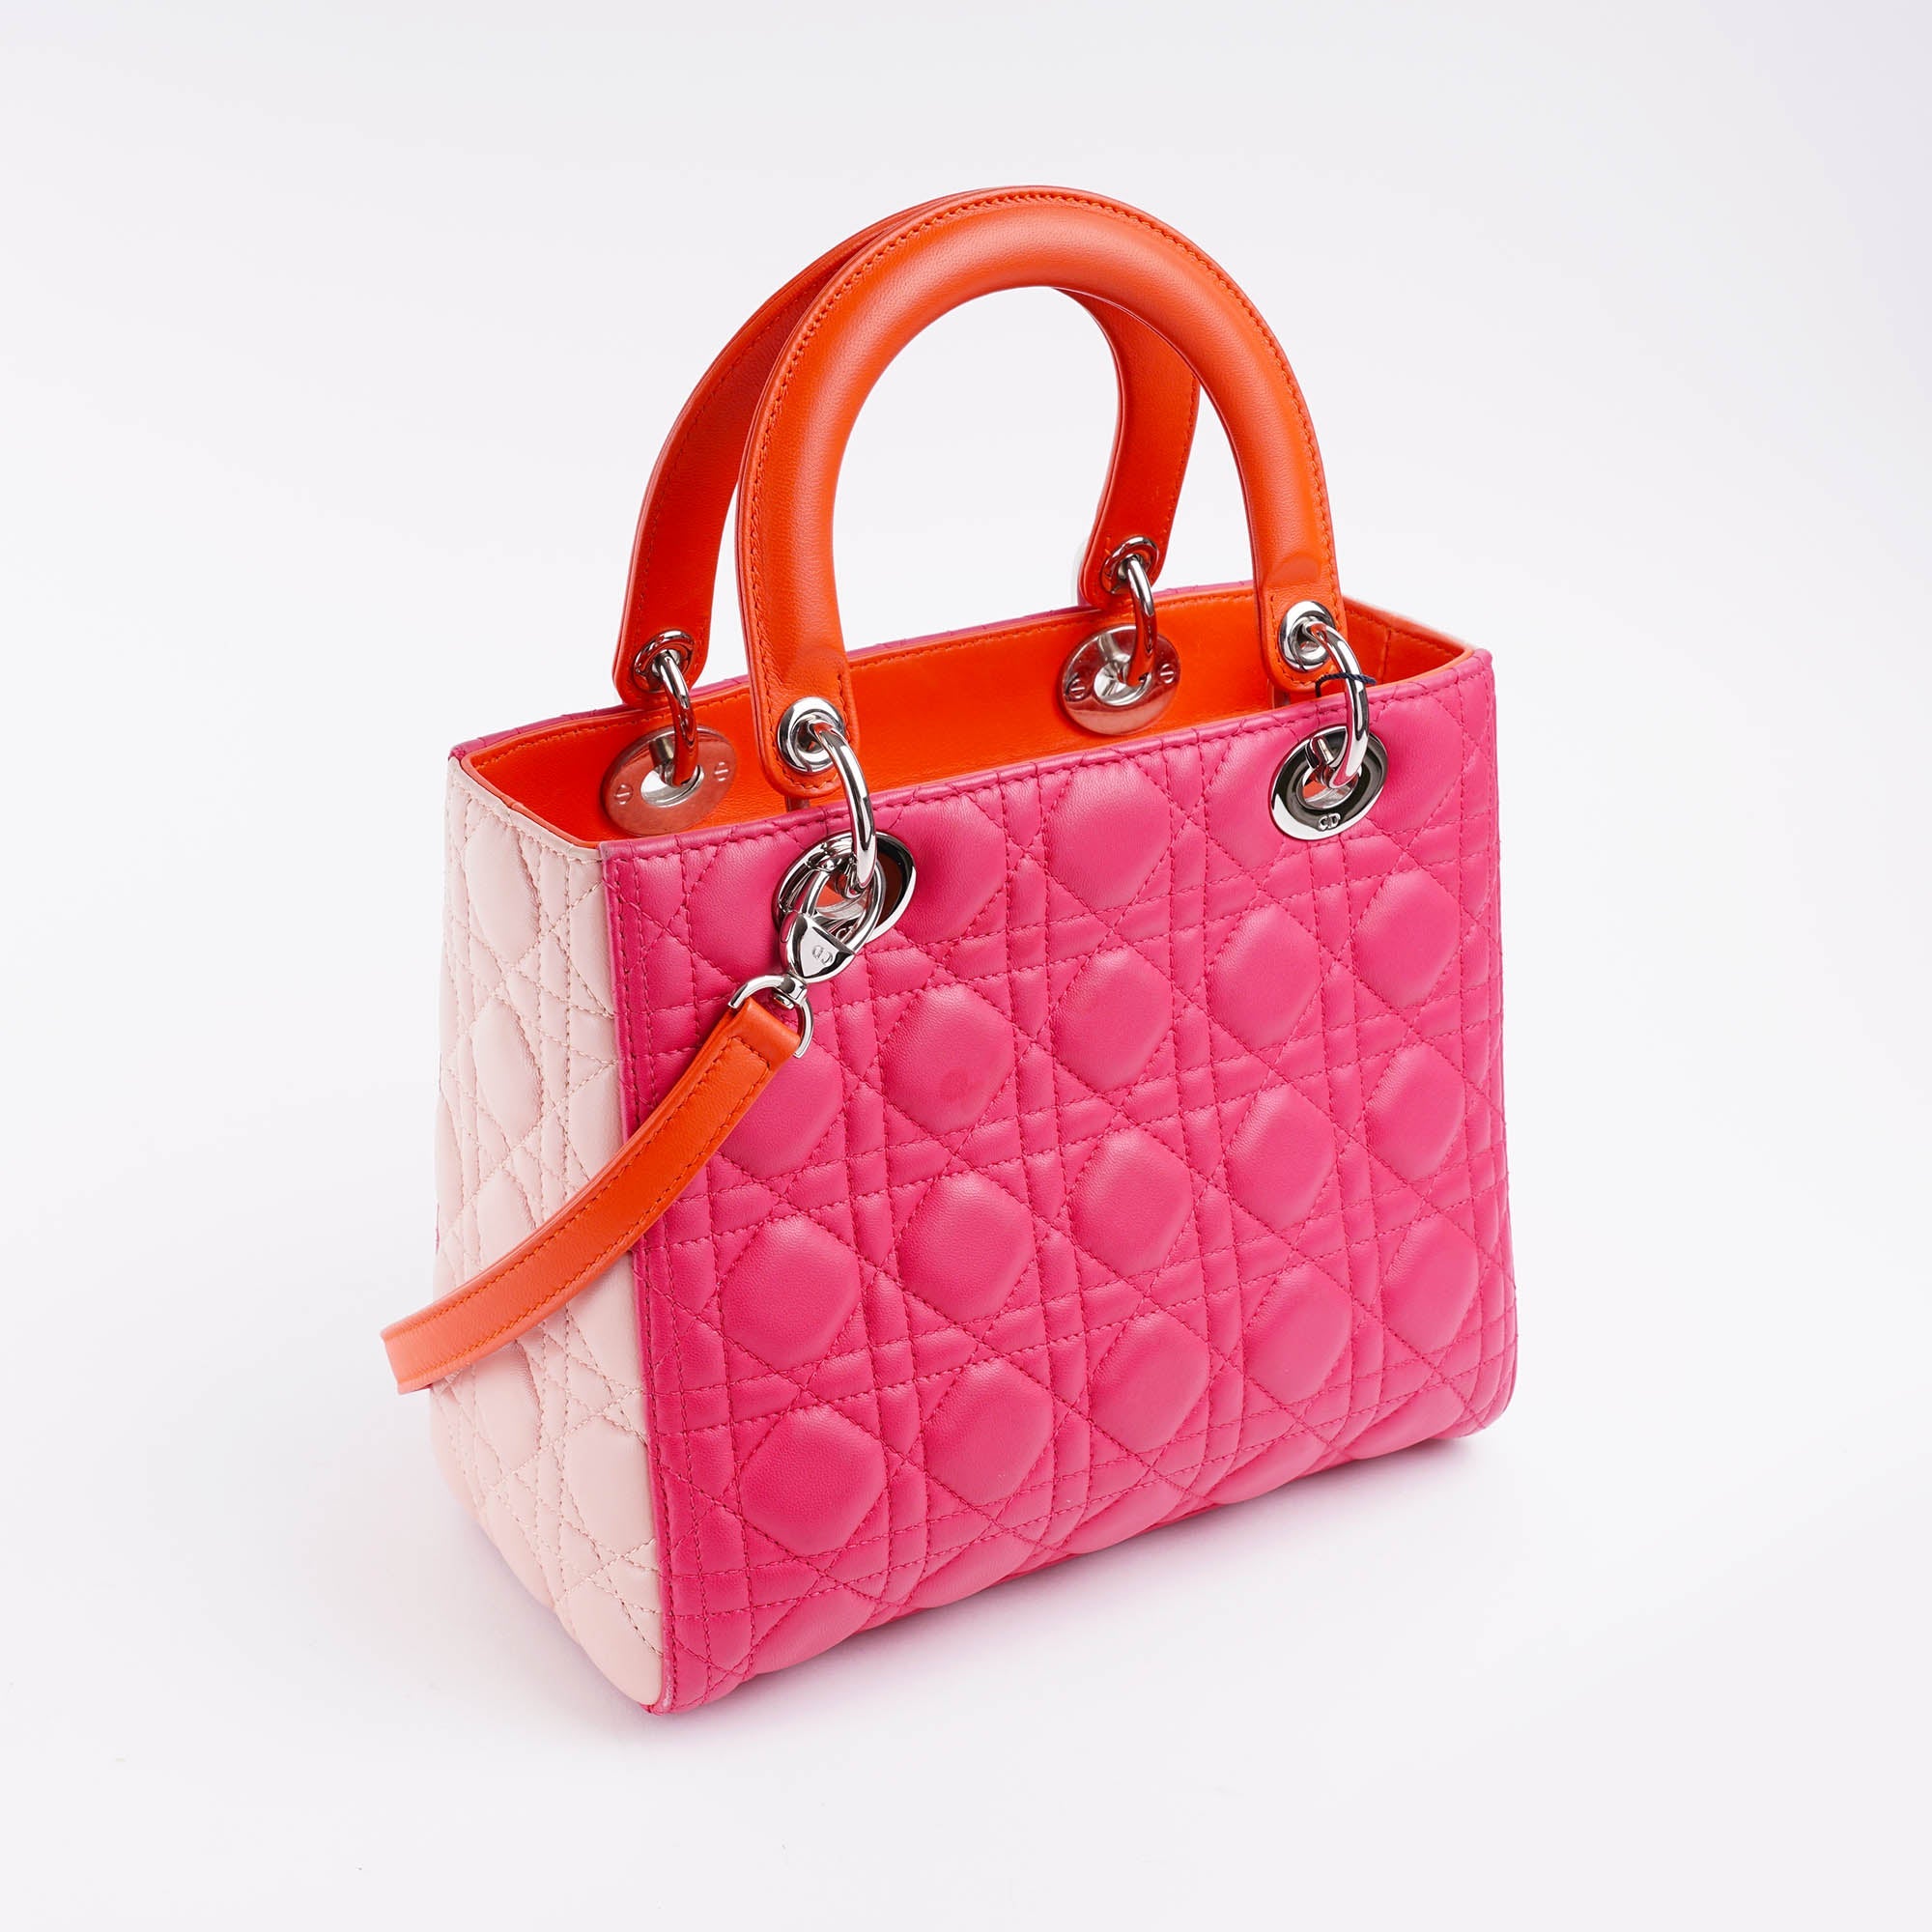 Lady Dior Medium Tricolor Handbag - CHRISTIAN DIOR - Affordable Luxury image